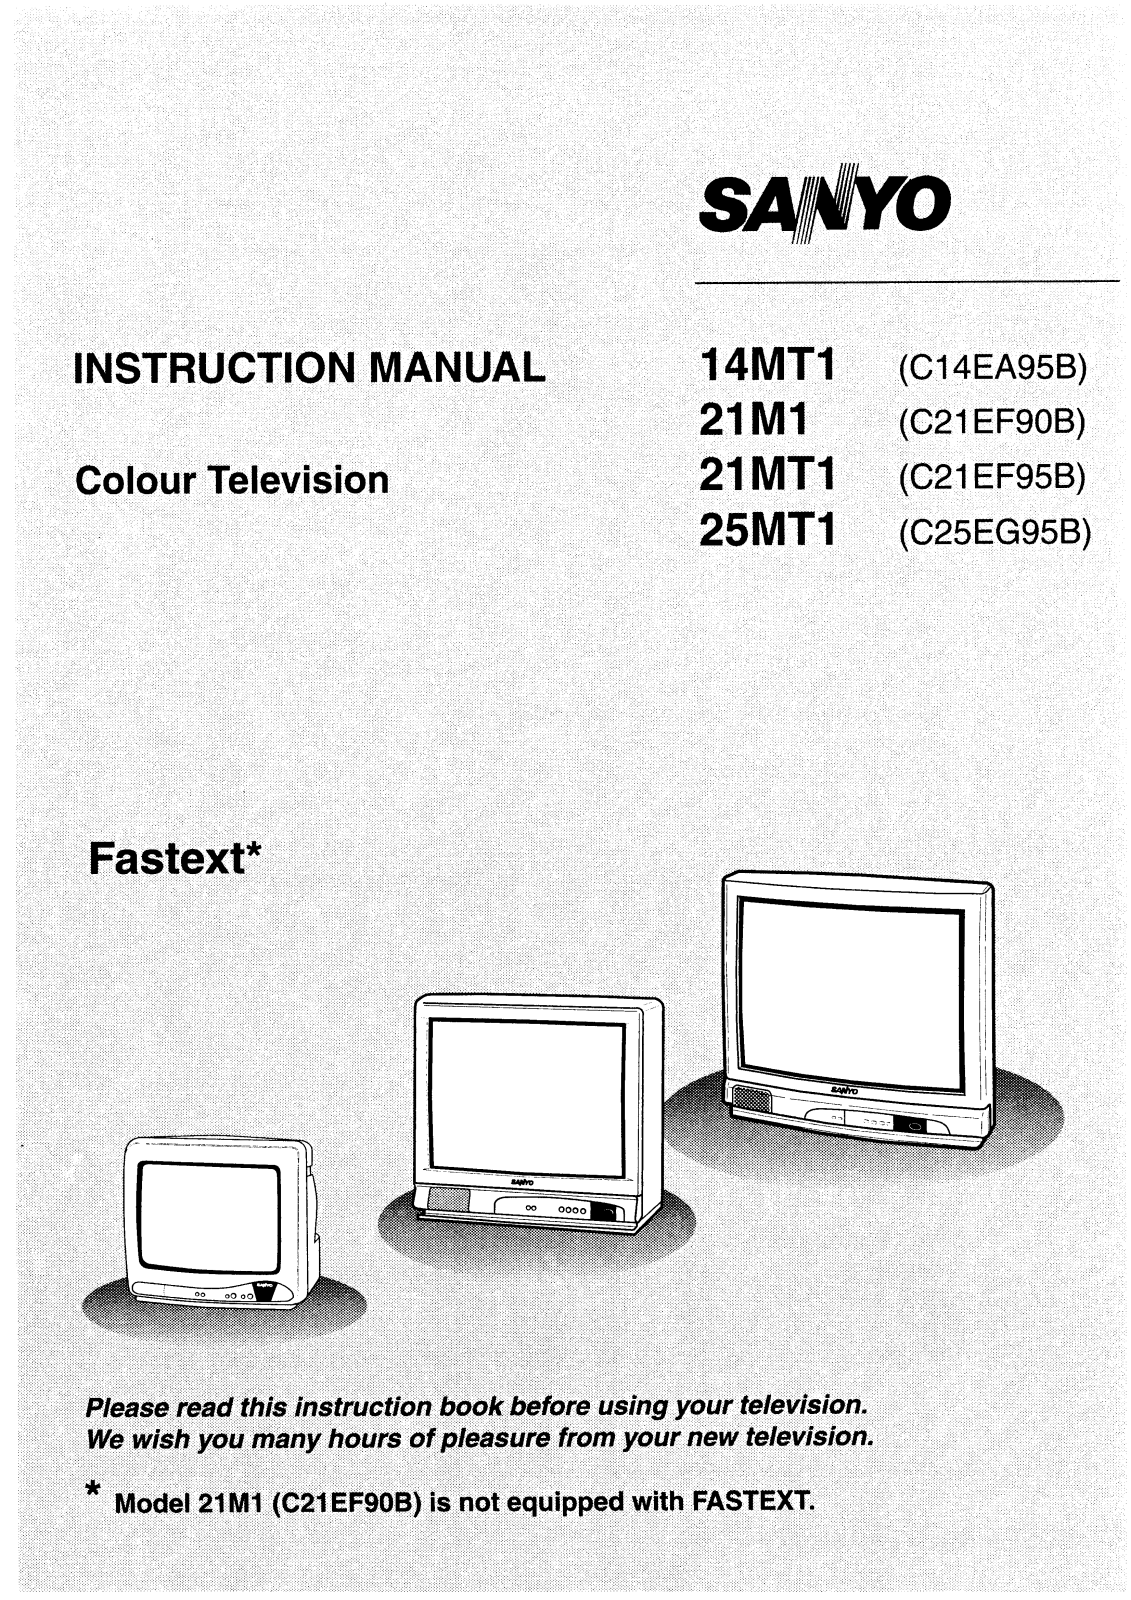 Sanyo 21M1, 21MT1, 25MT1 Instruction Manual